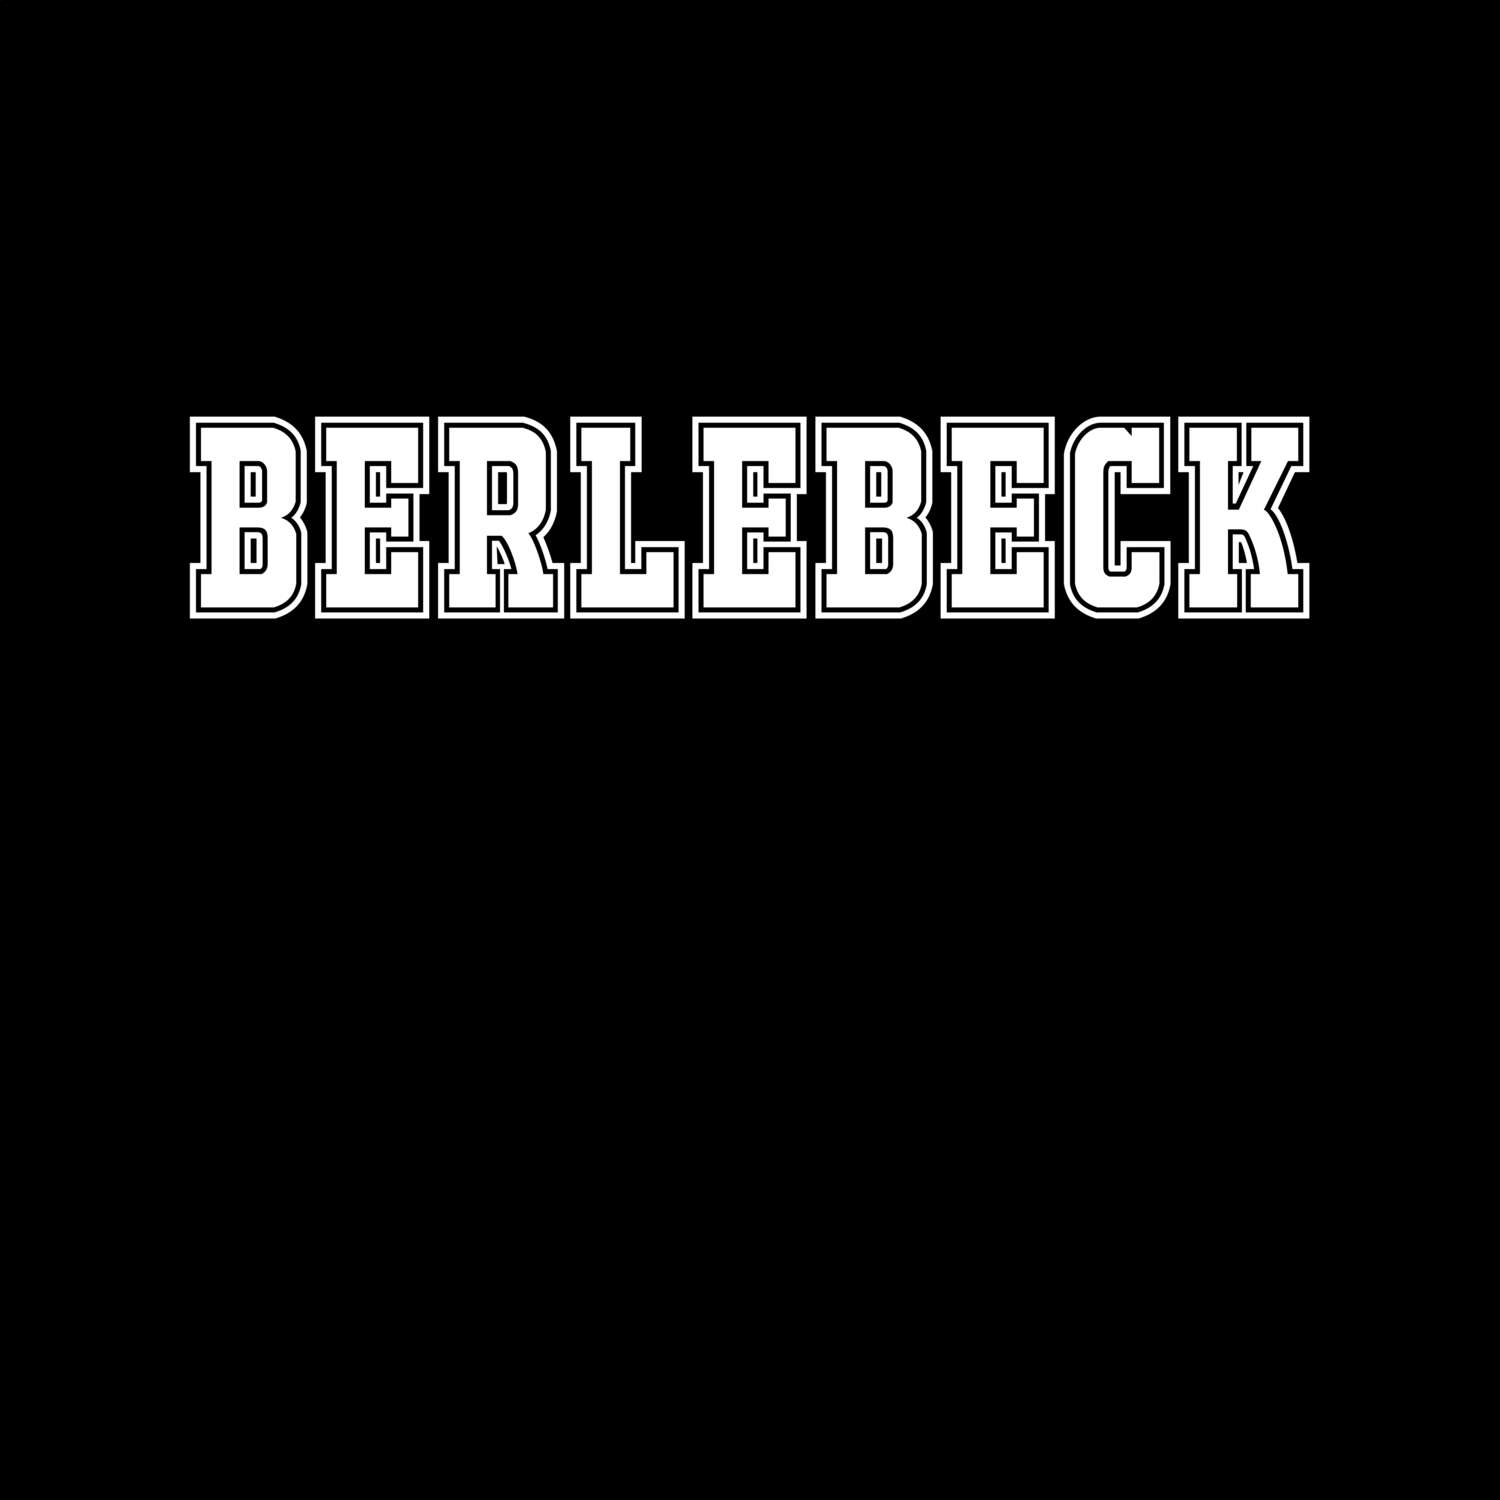 Berlebeck T-Shirt »Classic«